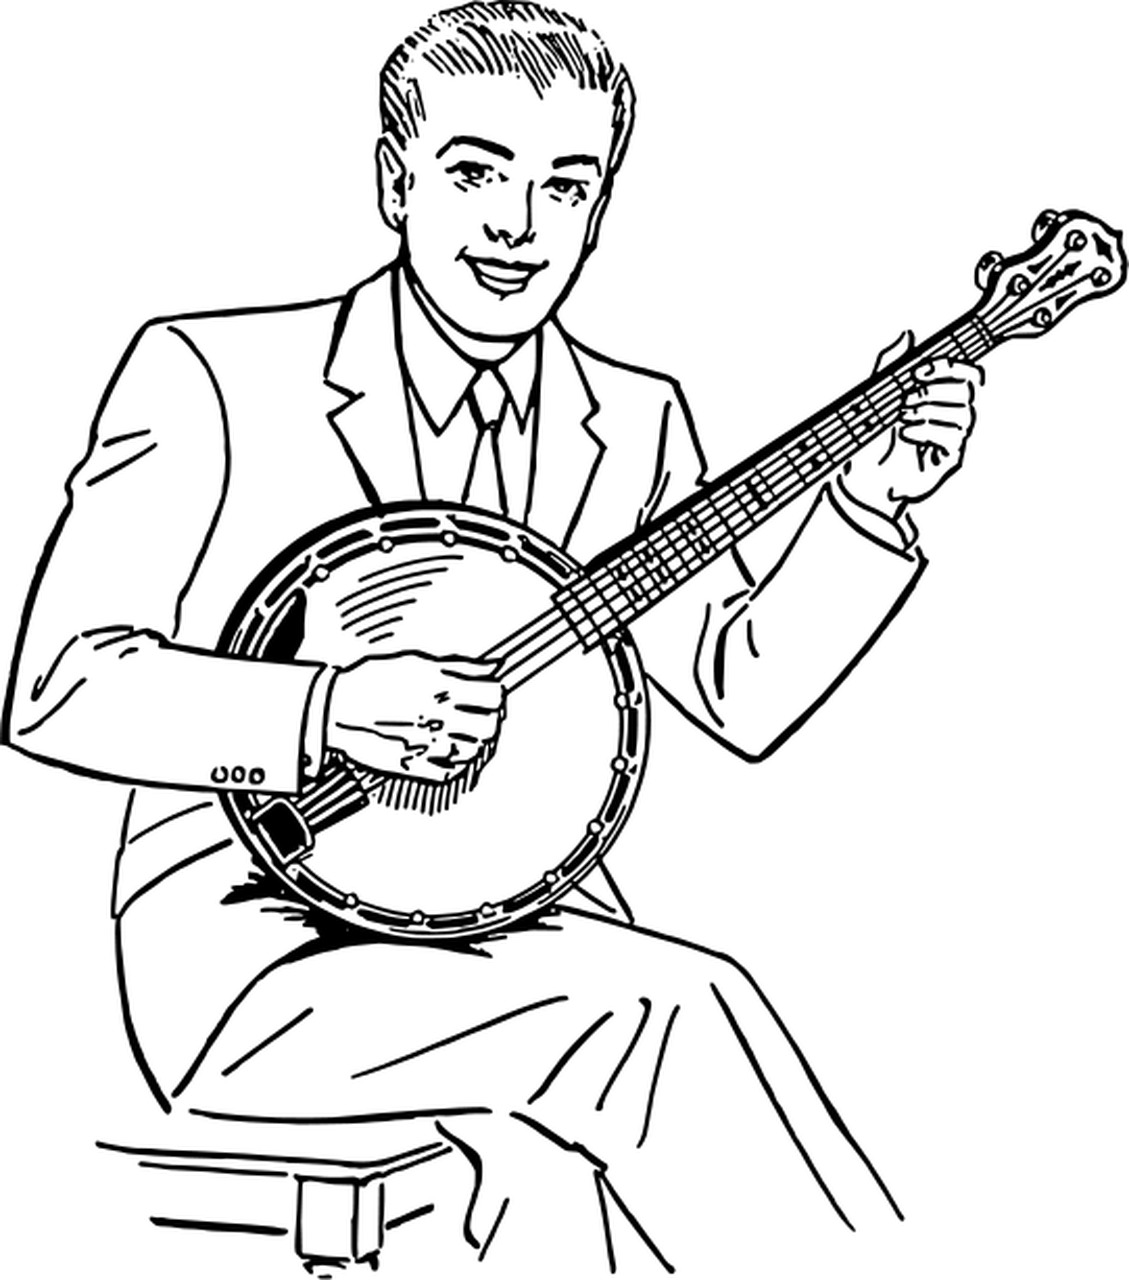 Omalovnka banjo k vytisknut na A4